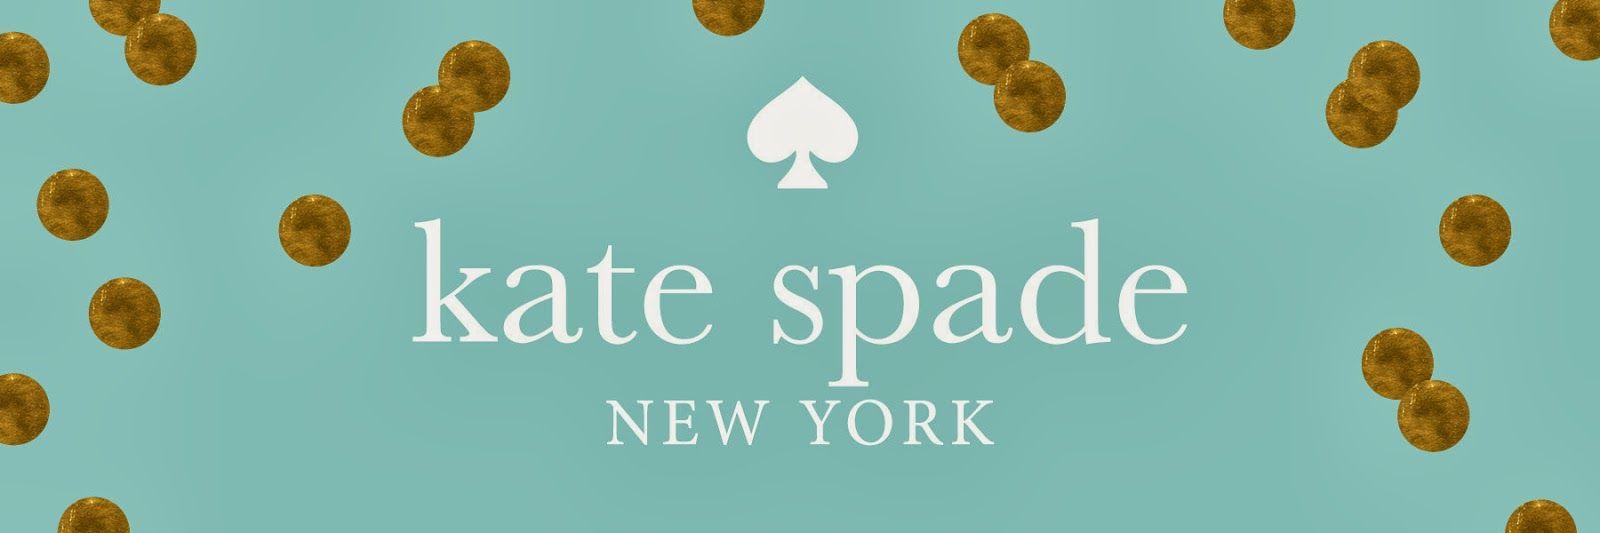 Gold Kate Spade Logo - Kate Spade New York. Designer Stationery. Shop Online & Afterpay it